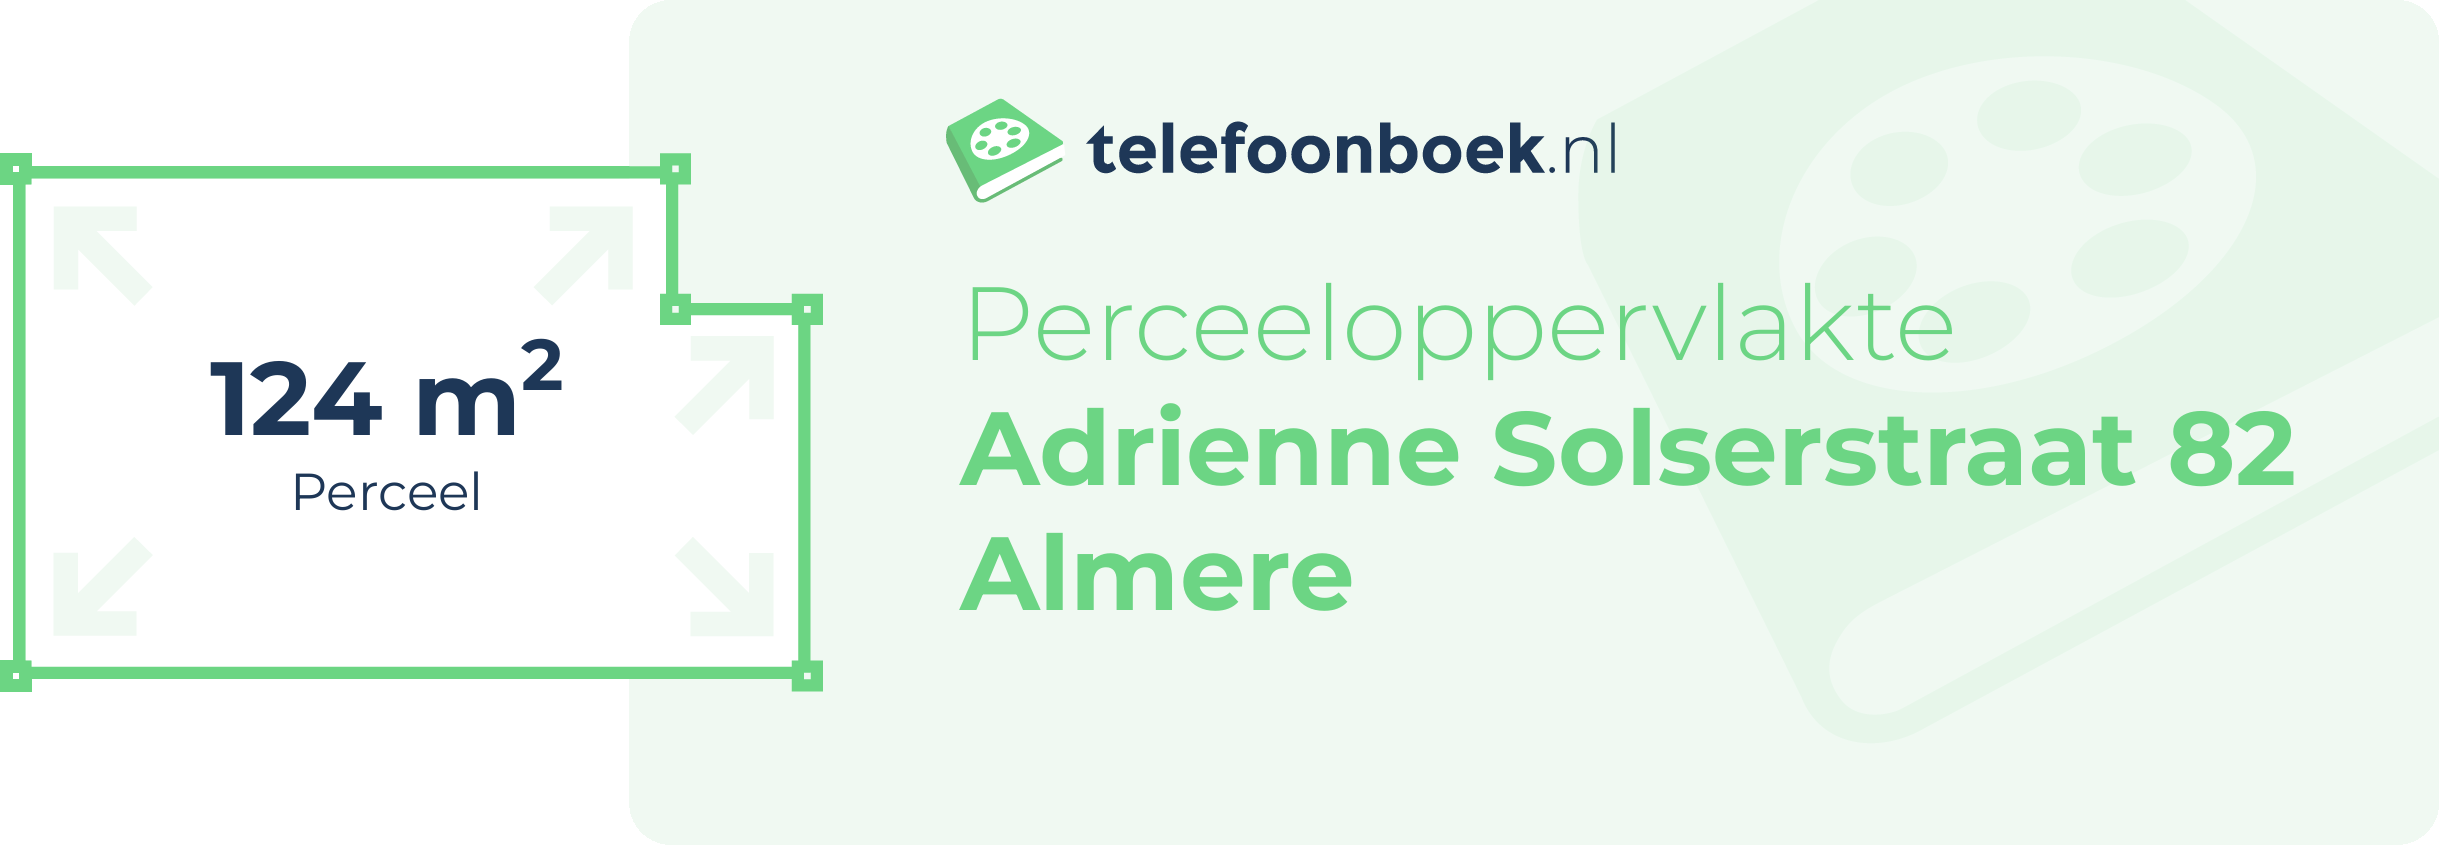 Perceeloppervlakte Adrienne Solserstraat 82 Almere